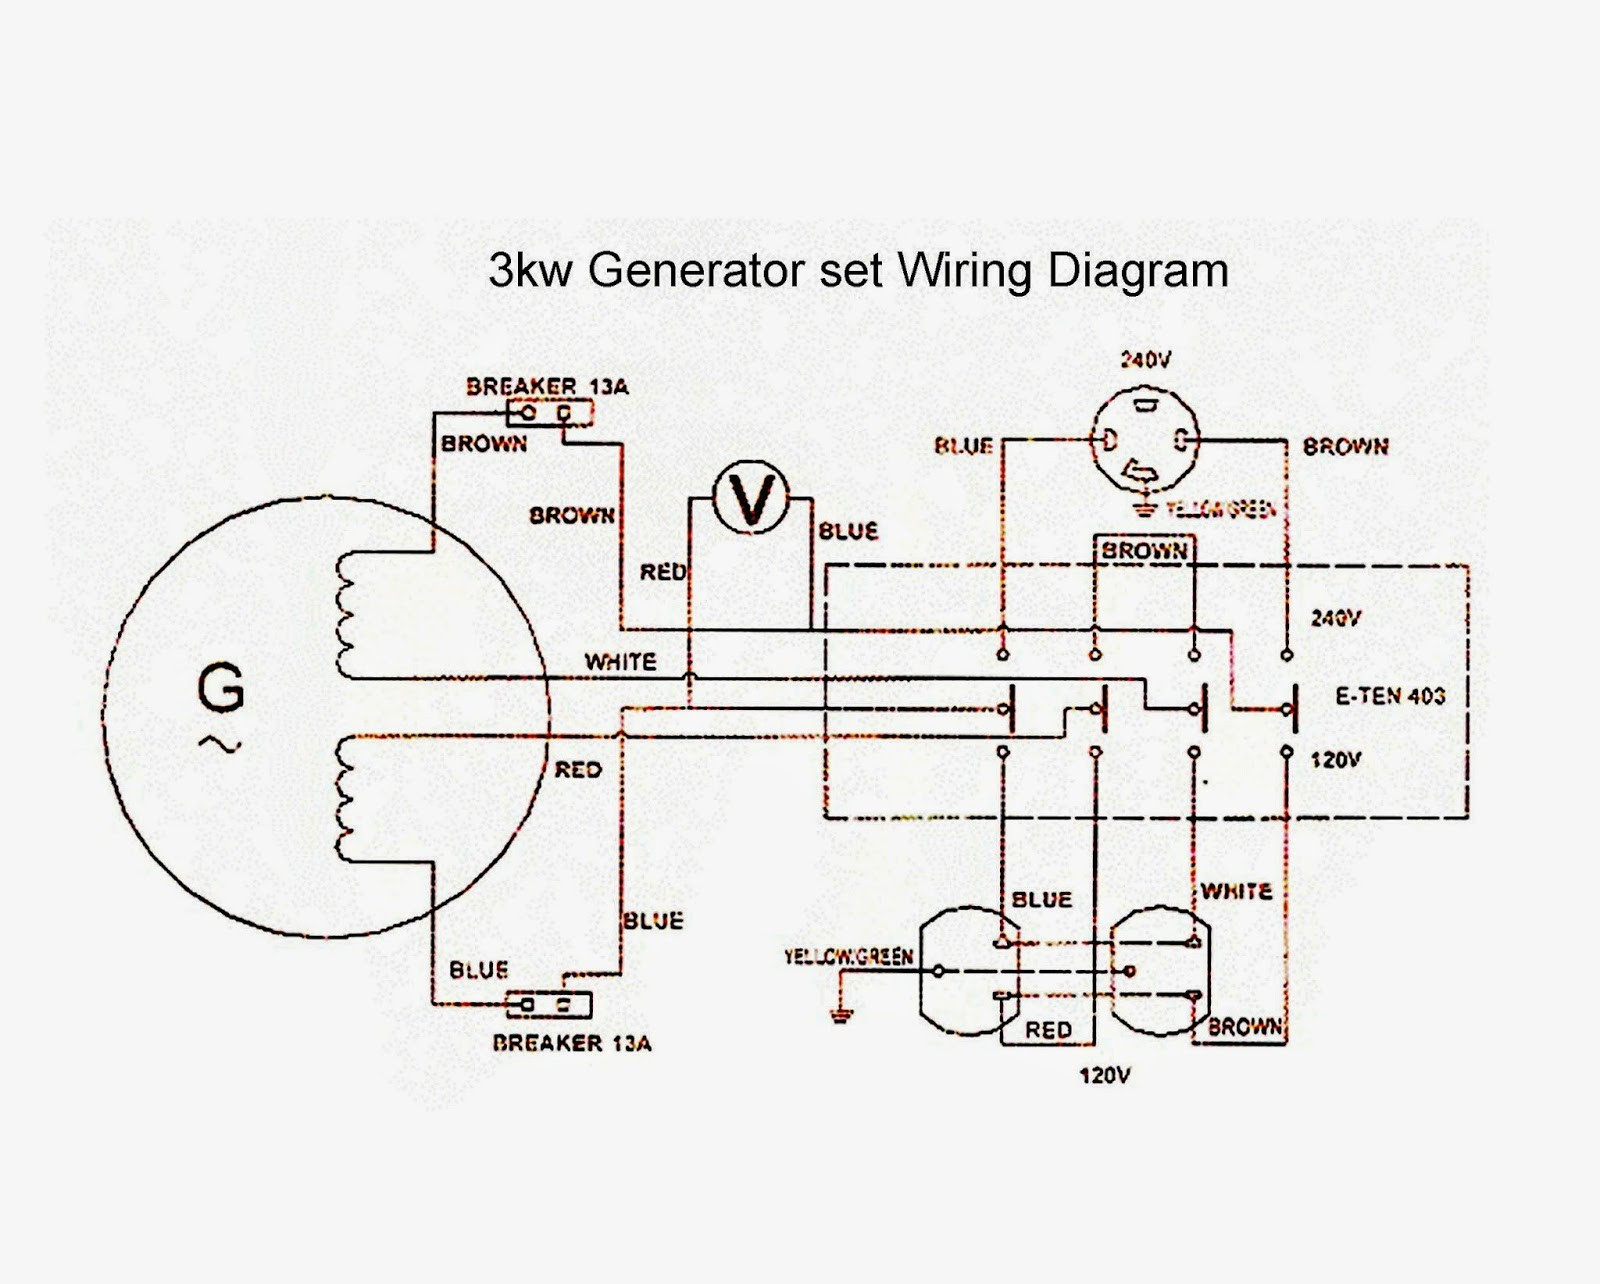 Wiring Diagram Maker Wiring Diagram Freeware Board Wiring Diagrams